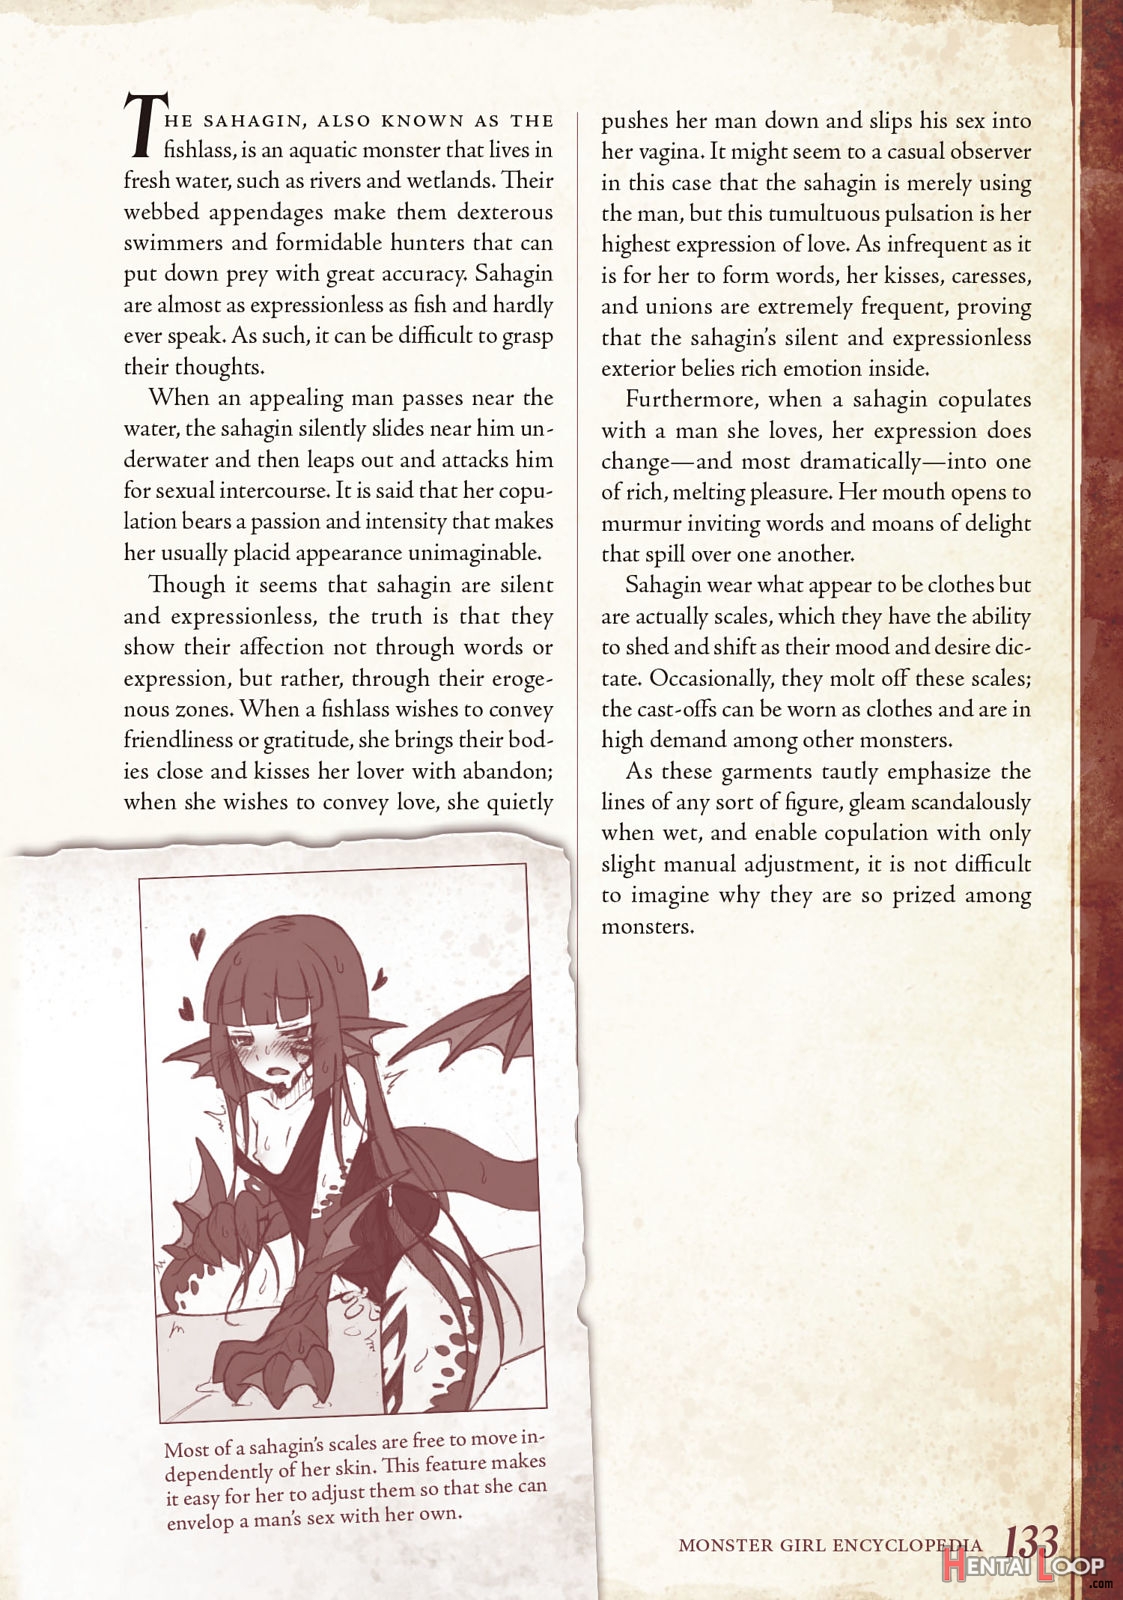 Monster Girl Encyclopedia Vol. 1 page 134